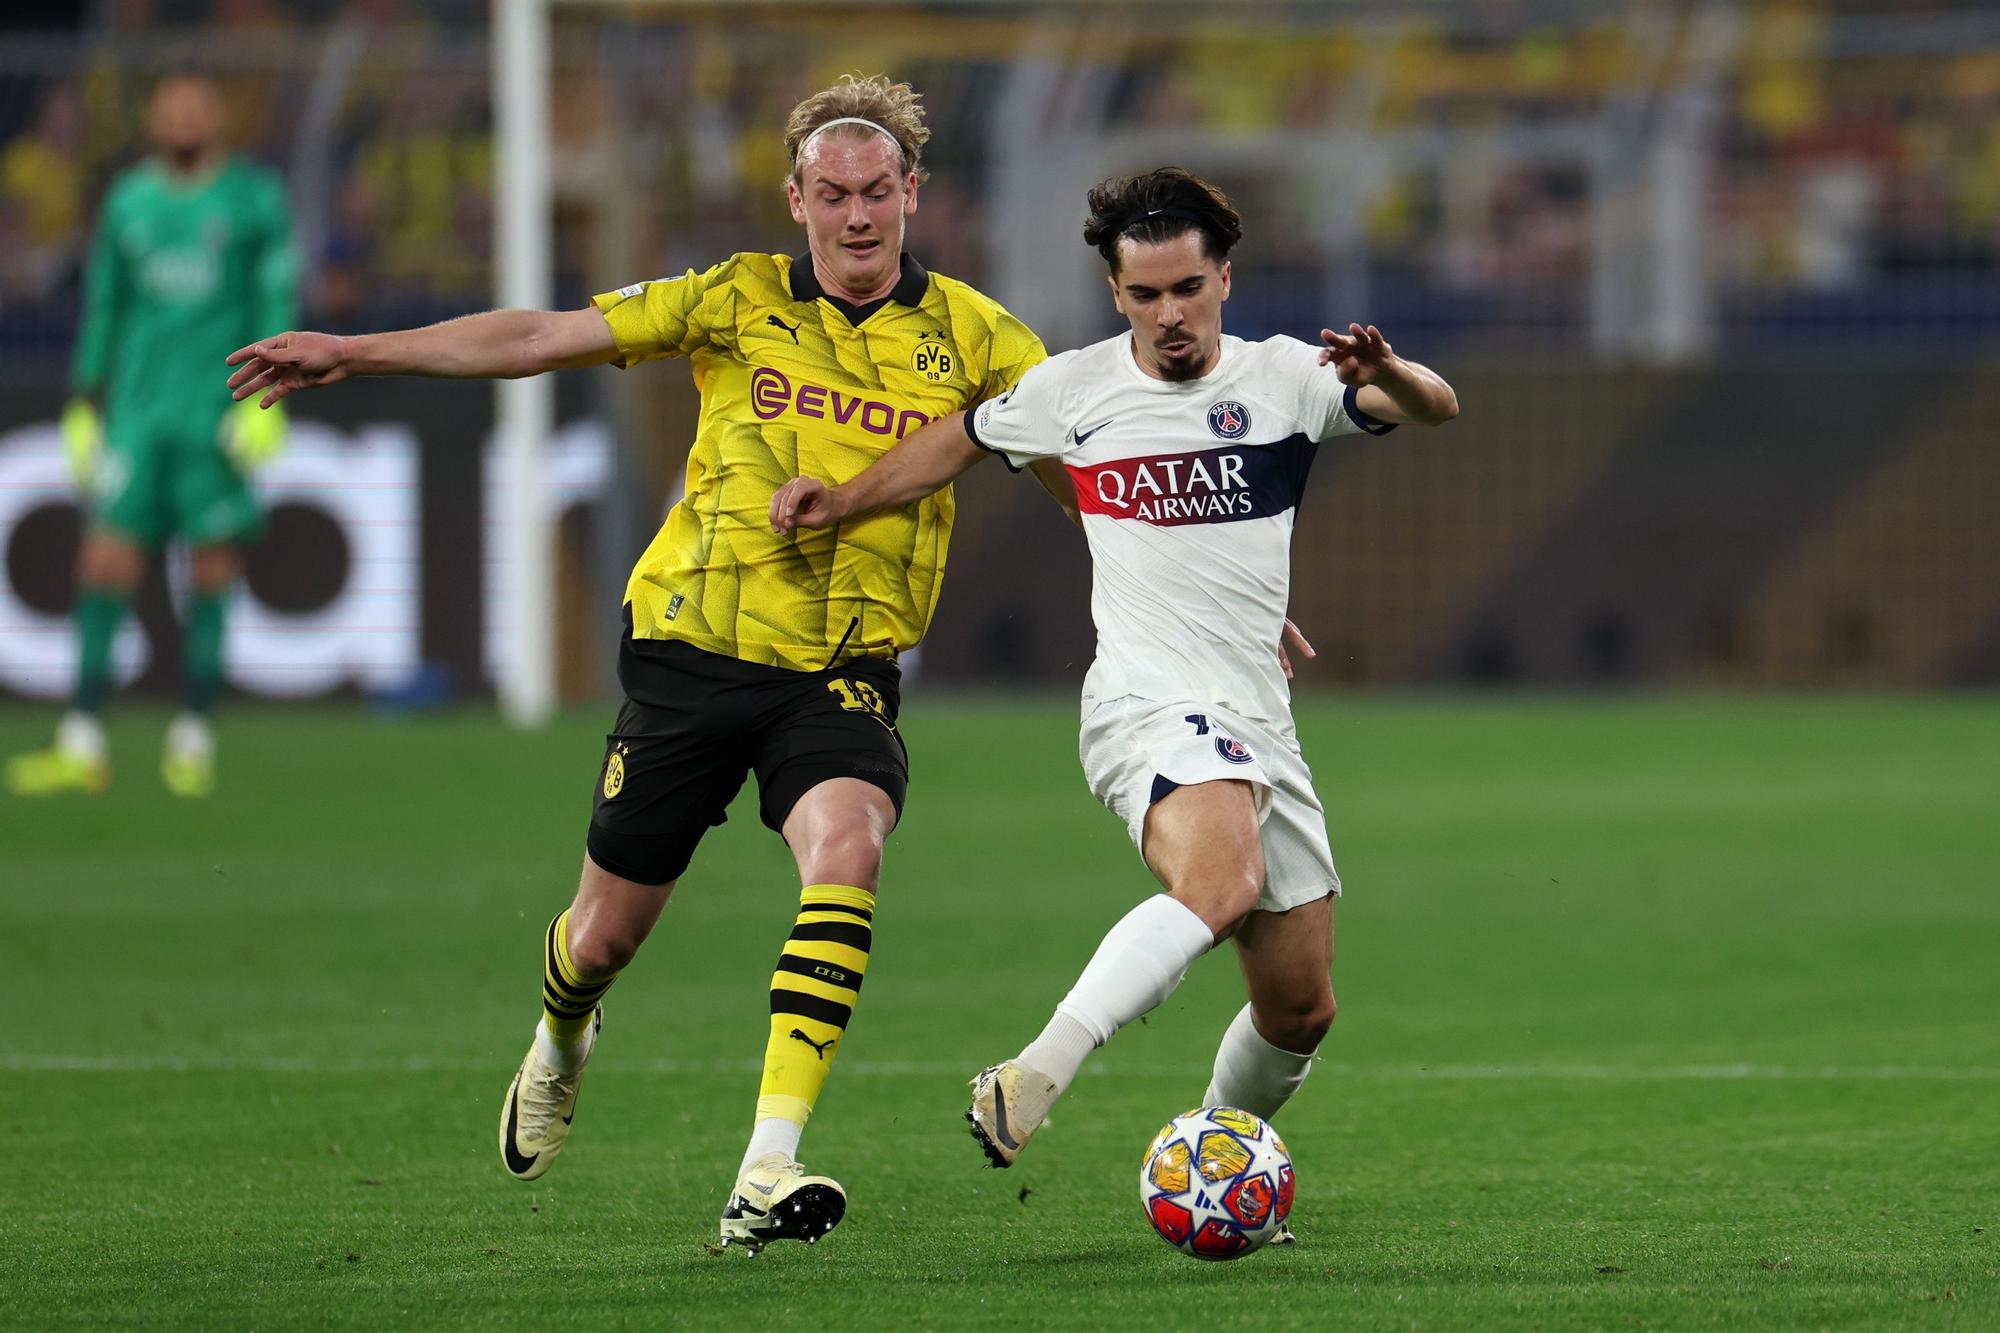 UEFA Champions League - Borussia Dortmund vs PSG